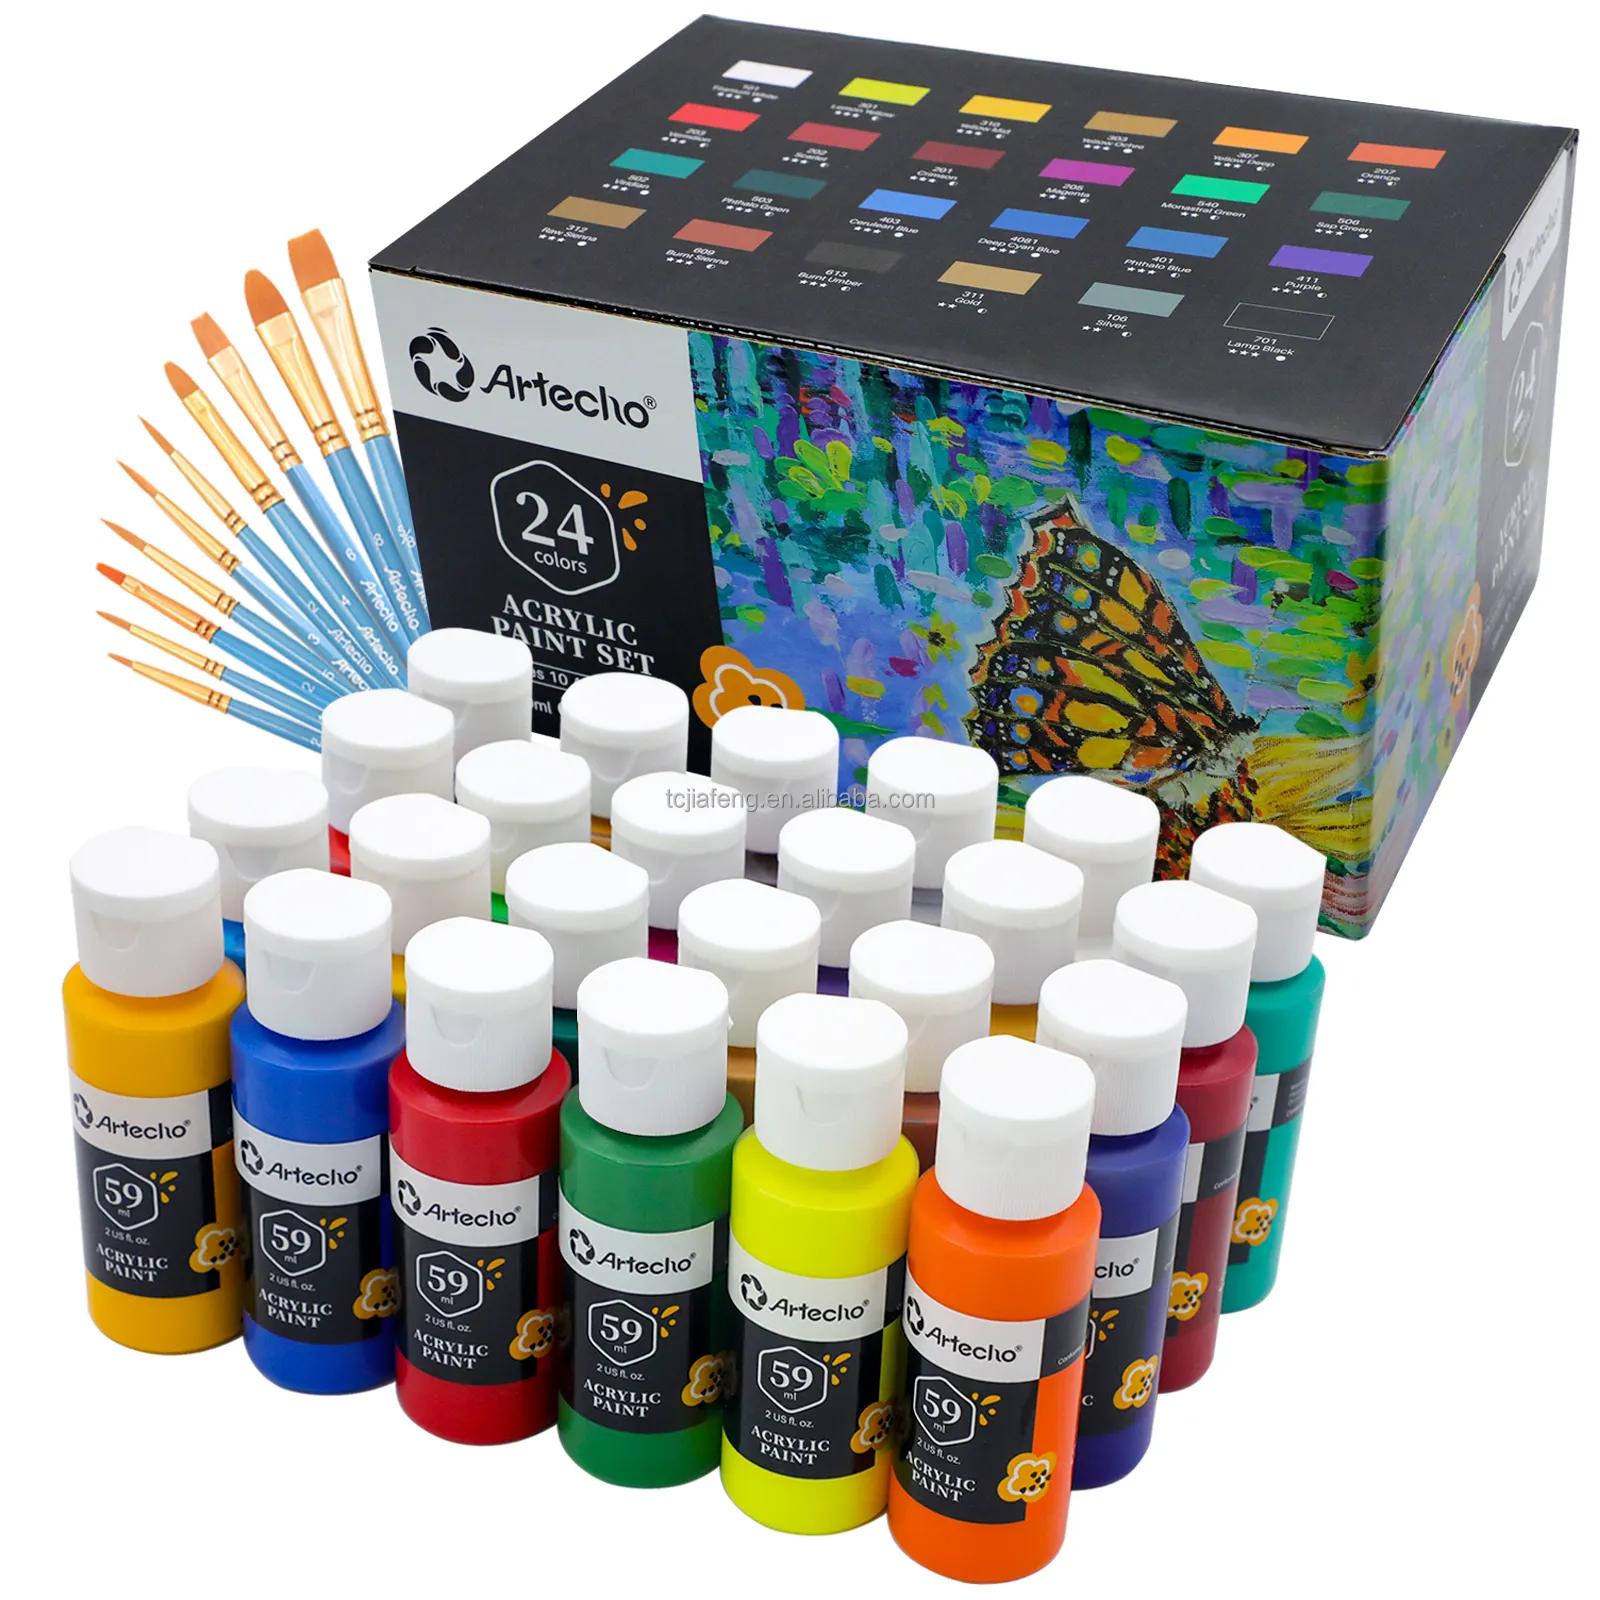 Artecho high quality 24colors acrylic paint set 2oz/59ml bottles with 10 pcs paint brush for art painting